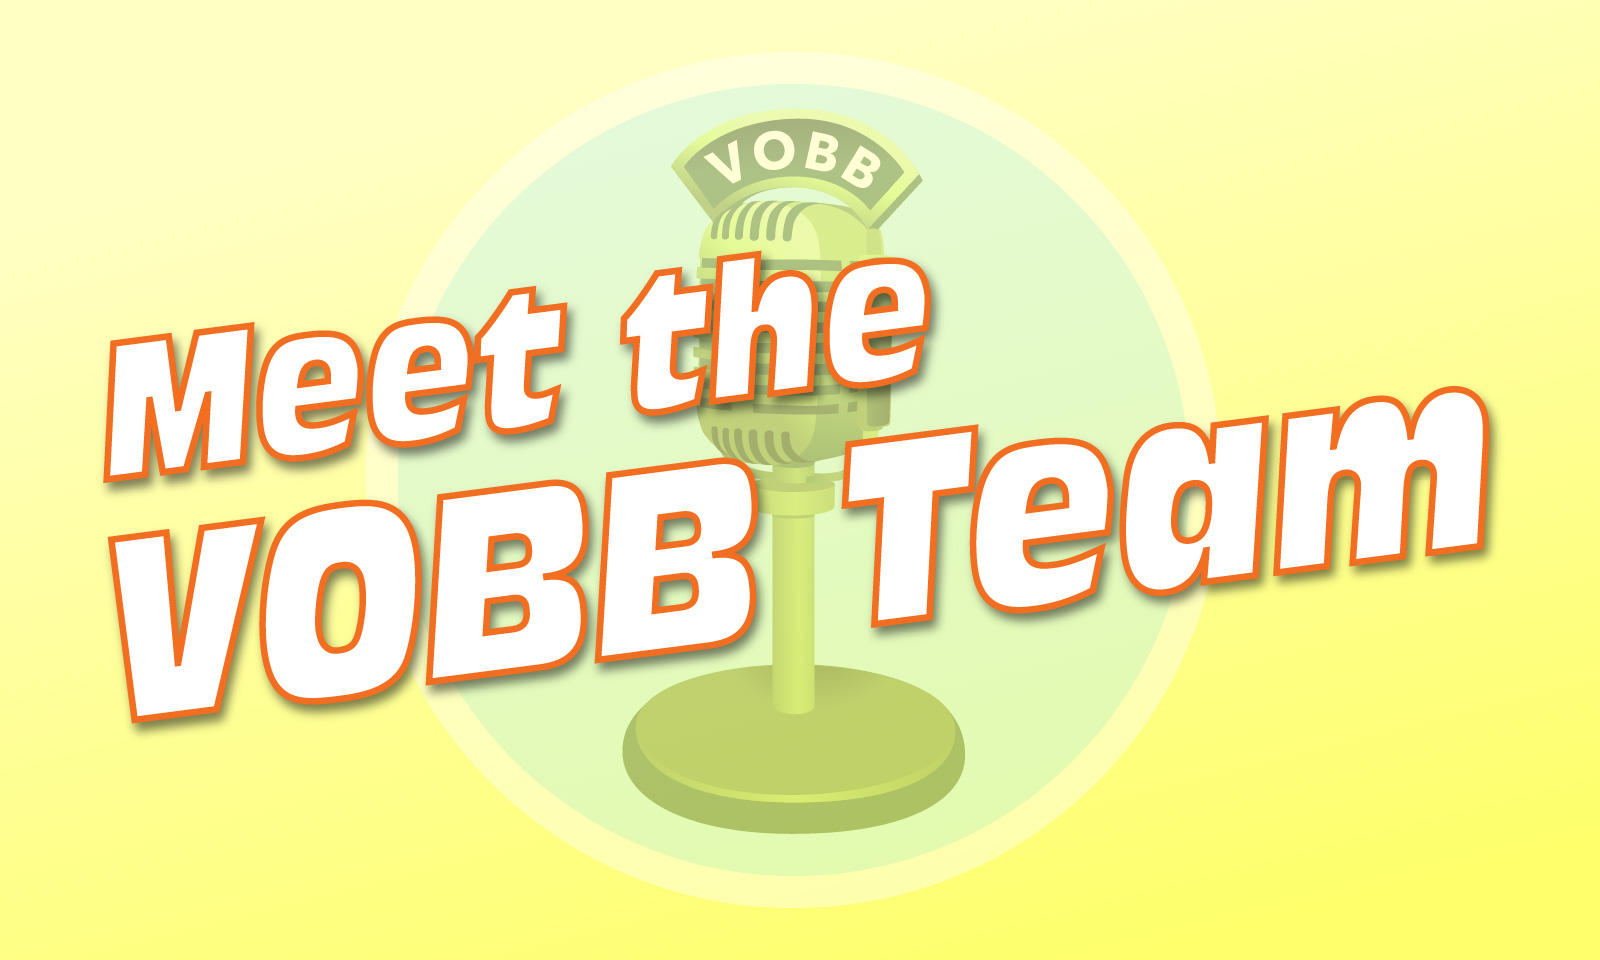 Meet the VOBB Team